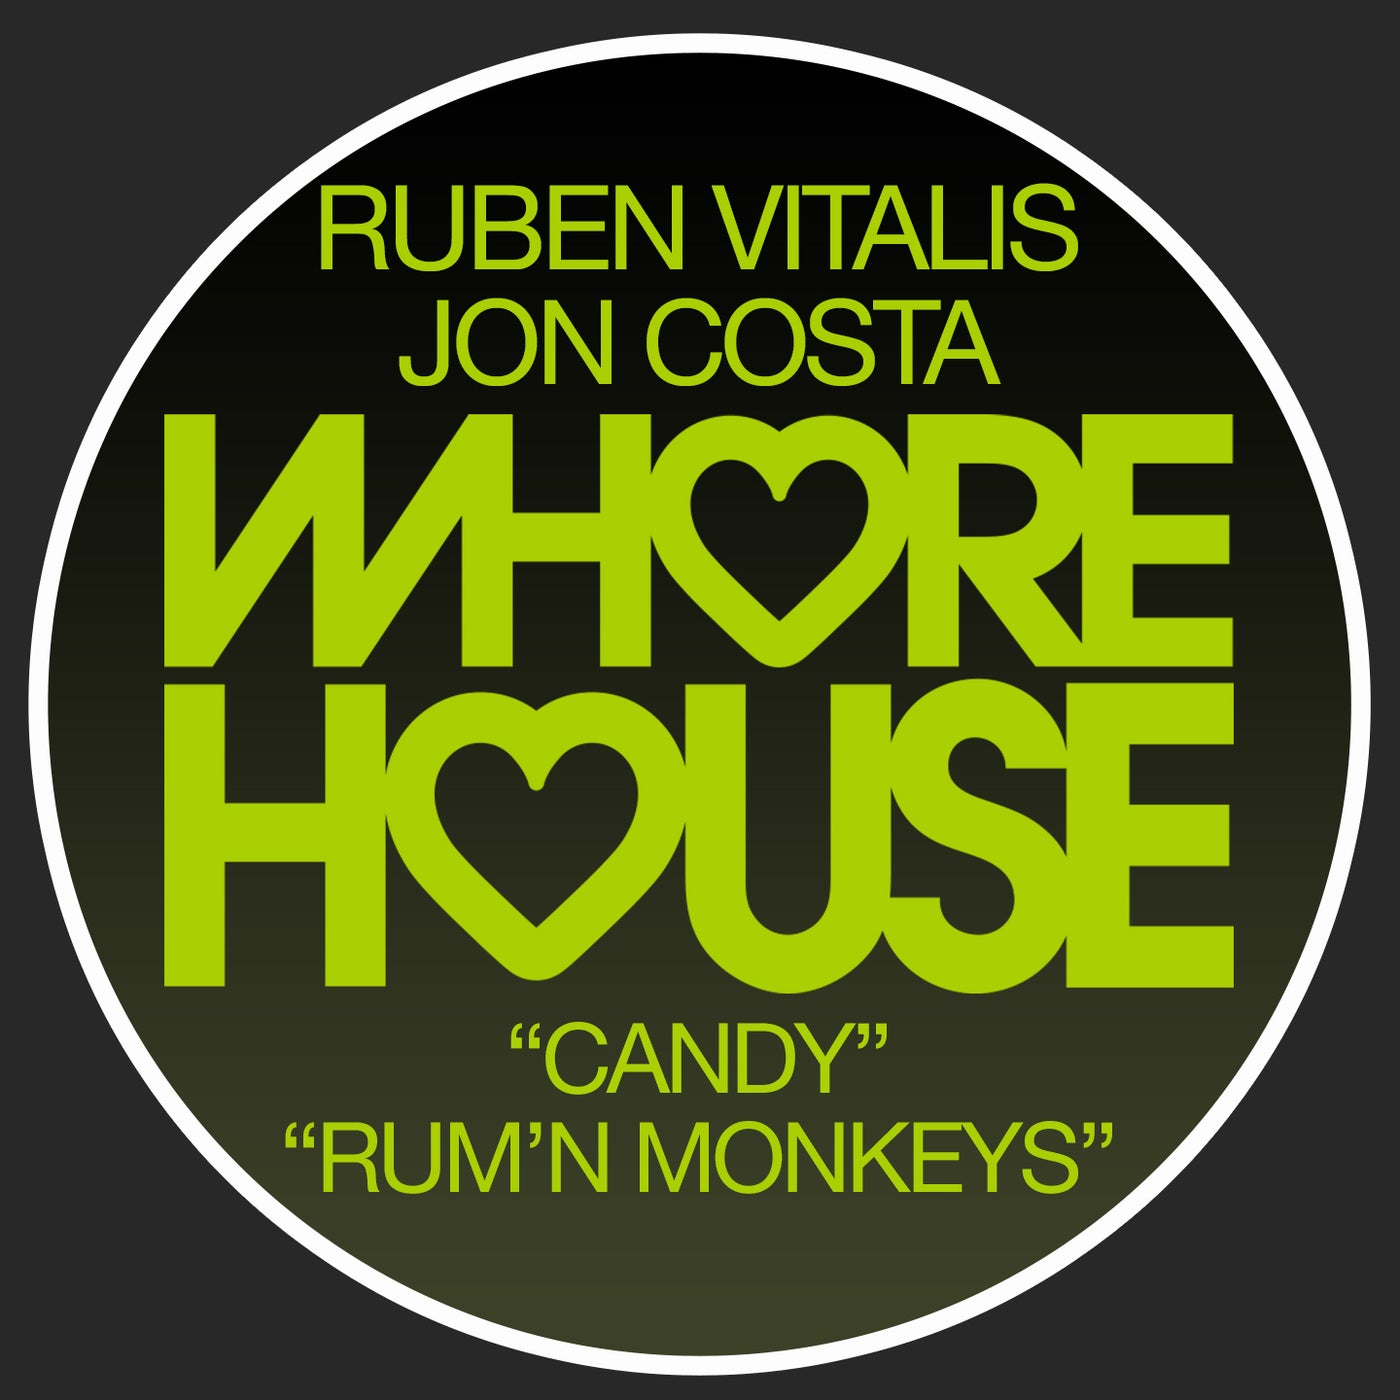 Ruben Vitalis, Jon Costa - Rum'n Monkeys (Original Mix)